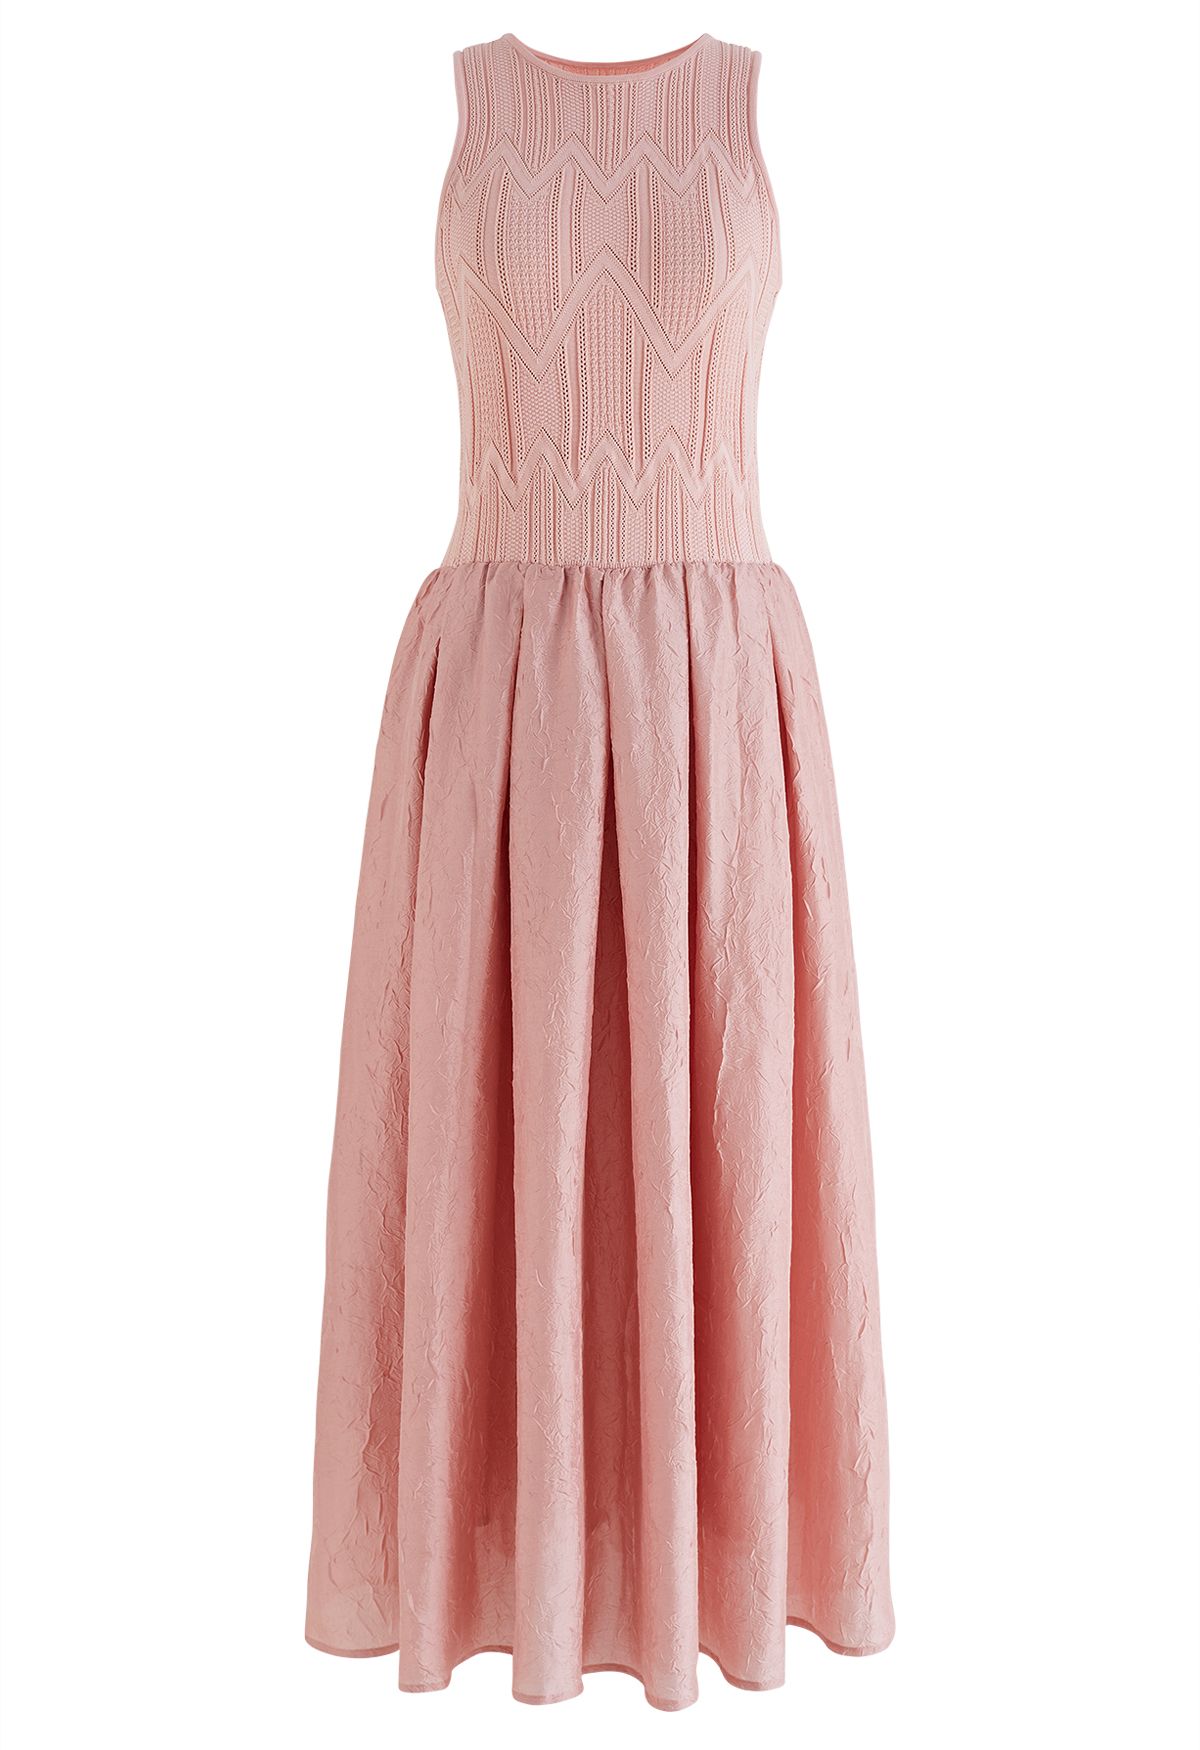 Knit Splicing Texture Sleeveless Dress in Pink